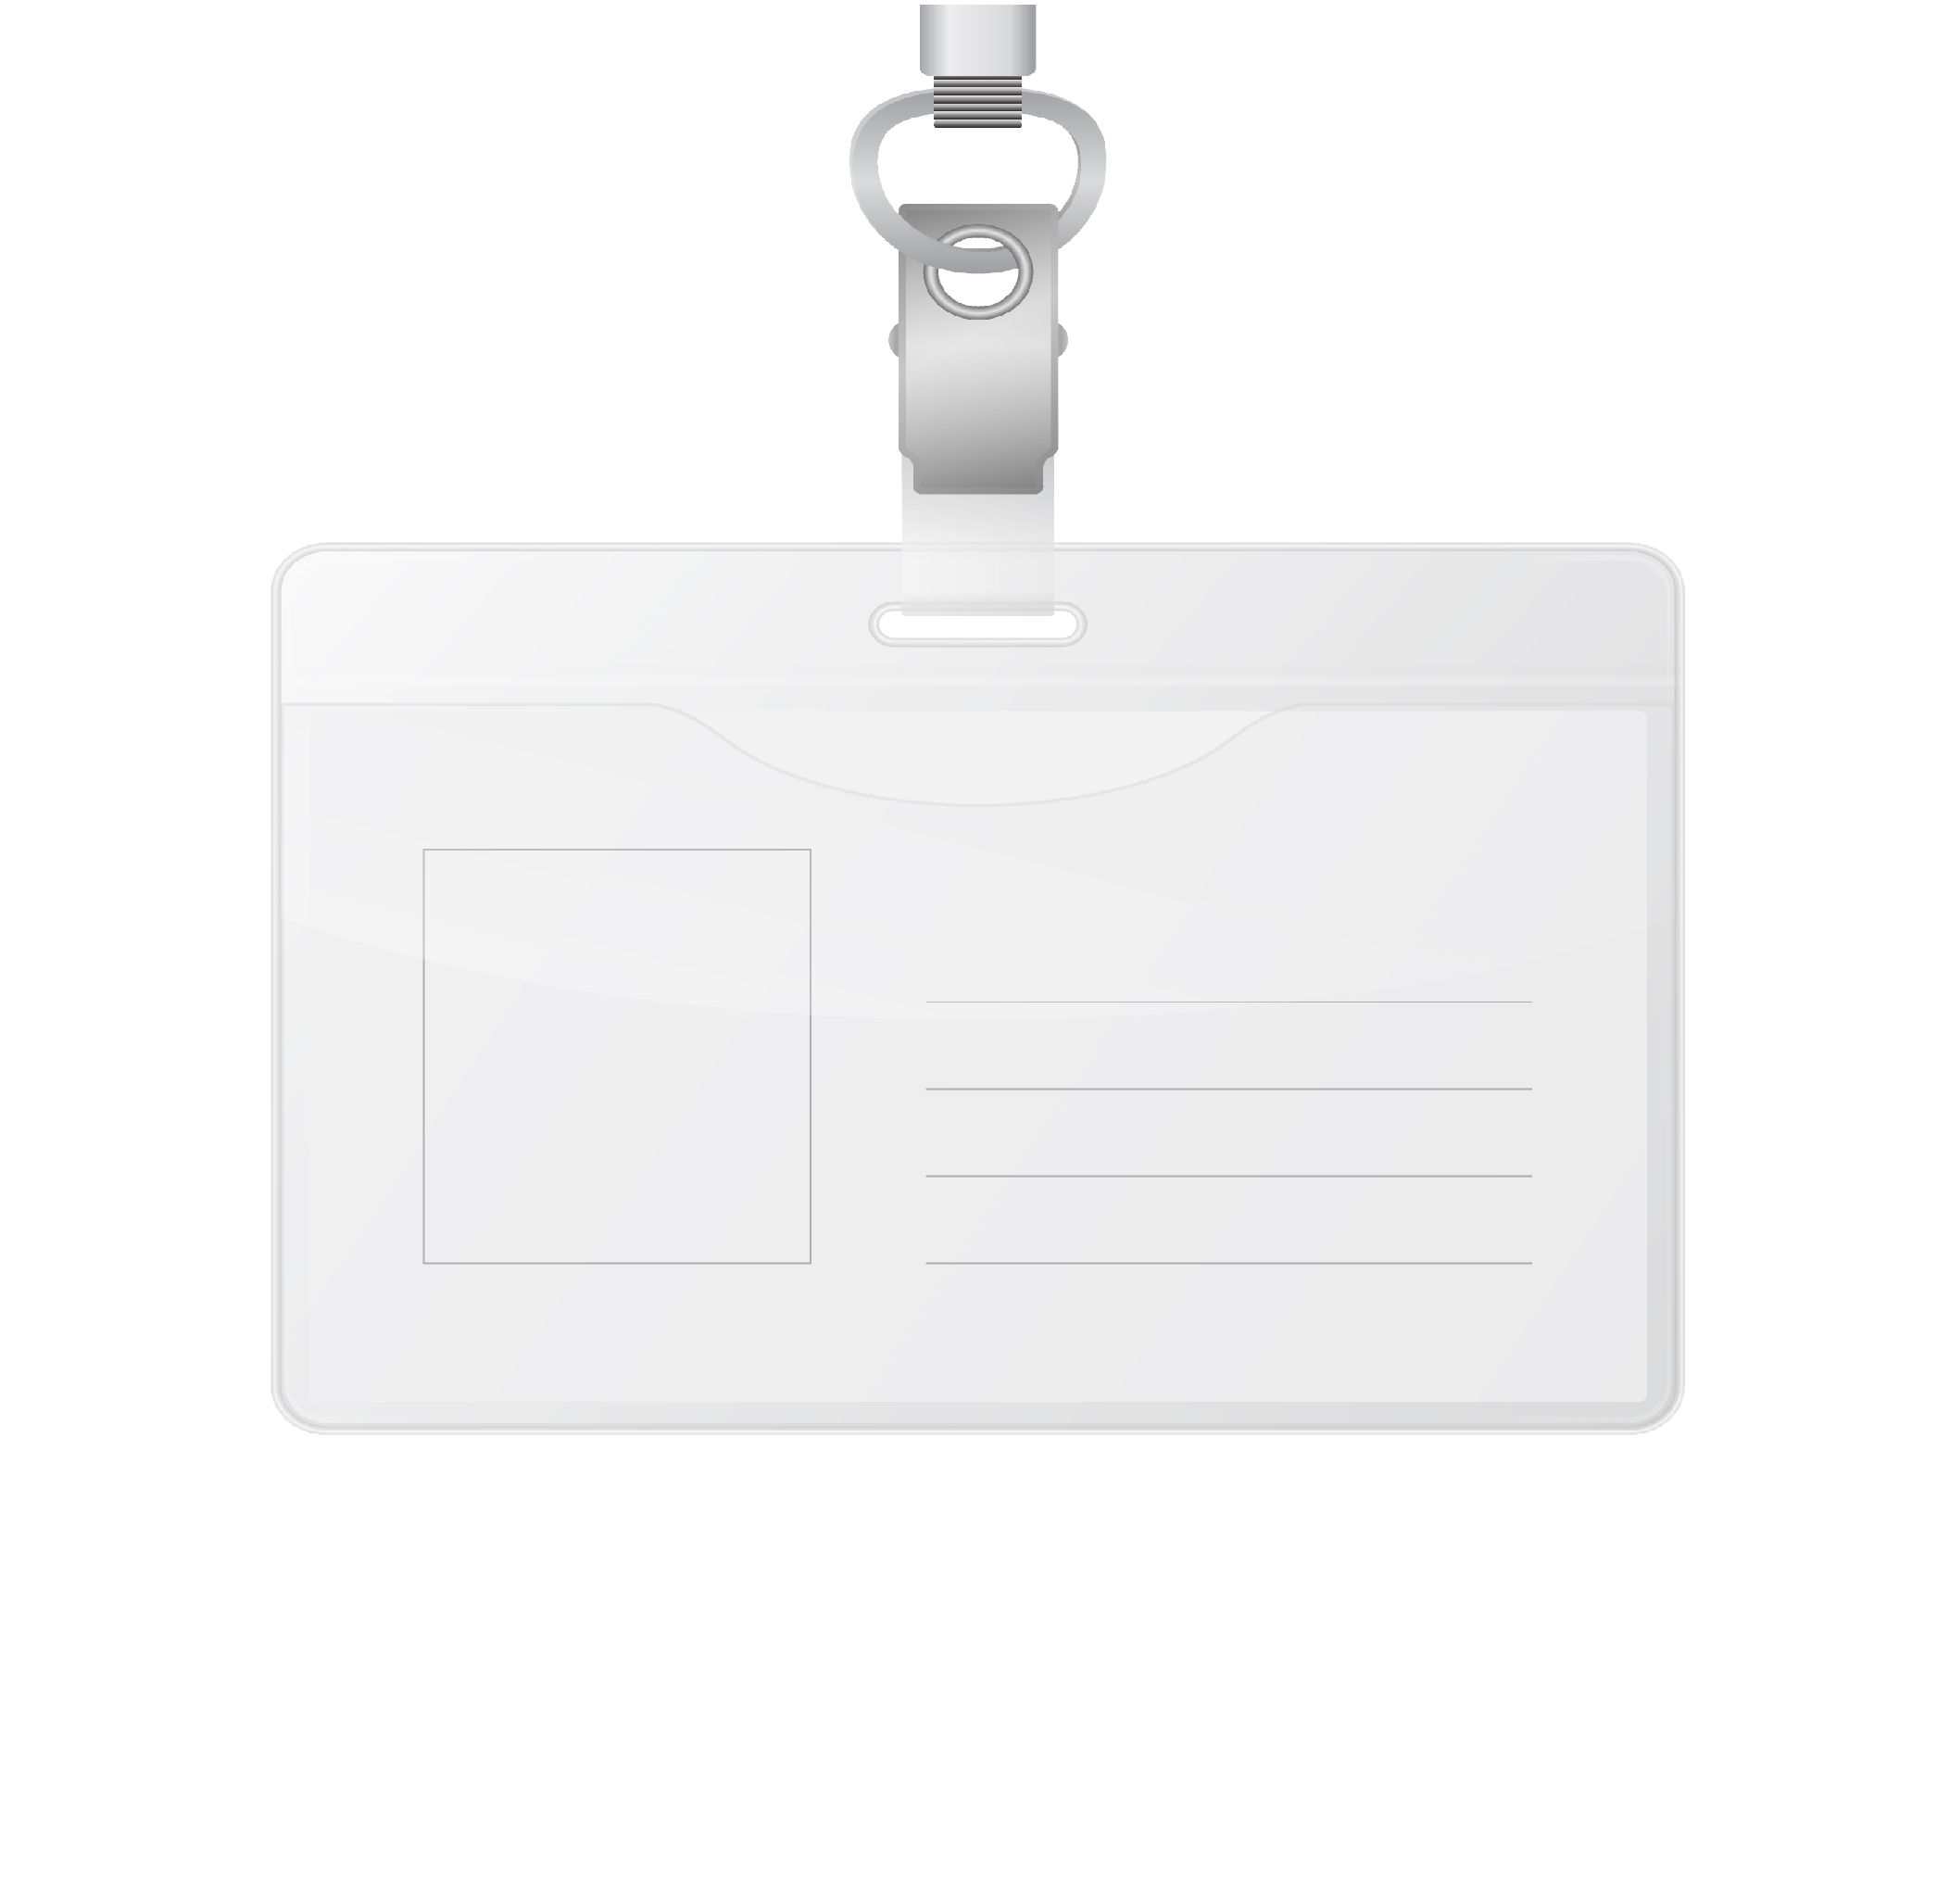 Horizontal Blank ID Card